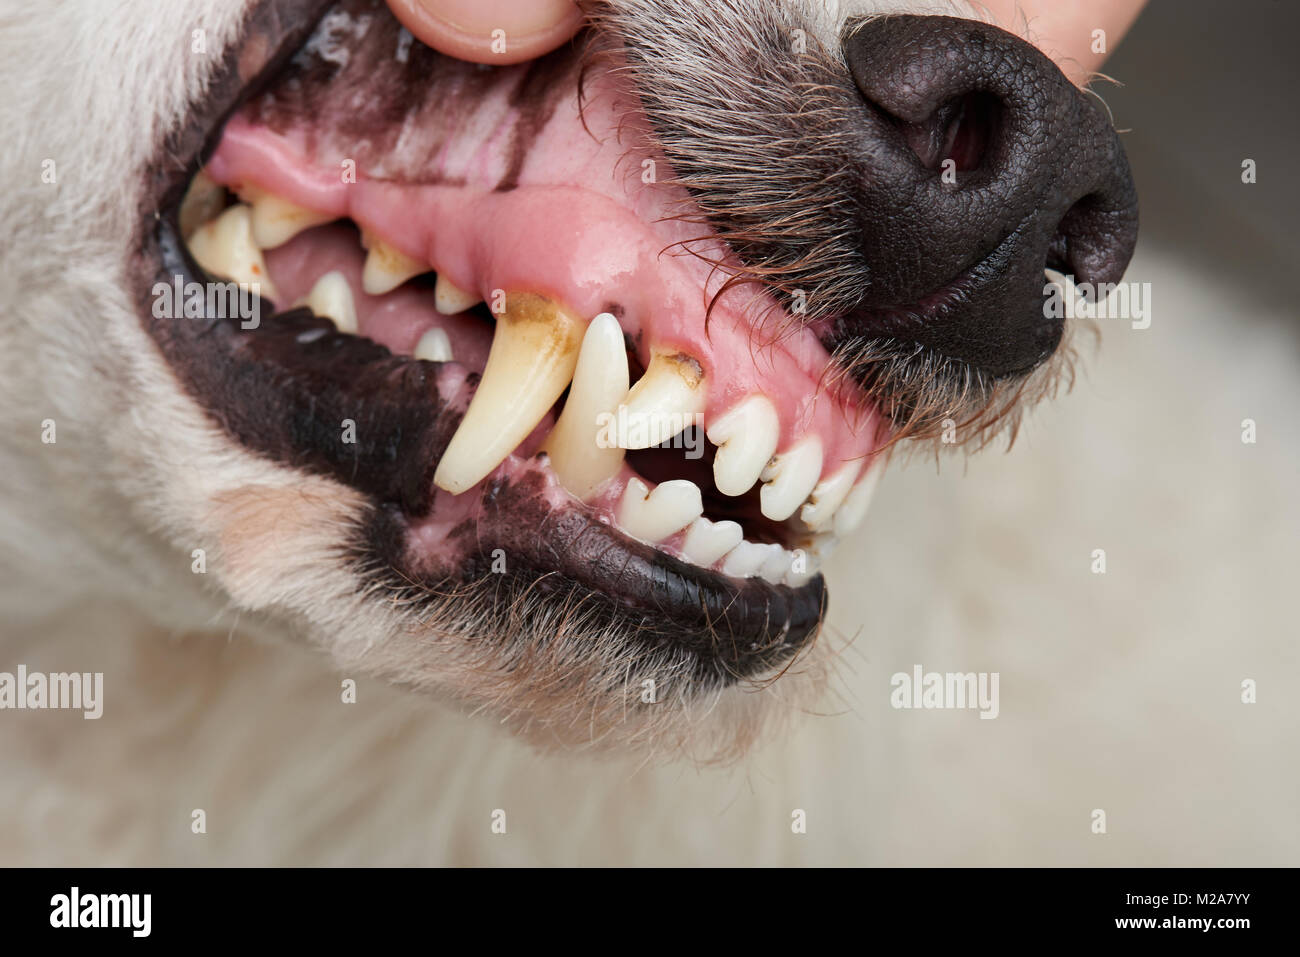 Dog teeth with cavities close-up. Checking dog teeth Stock Photo